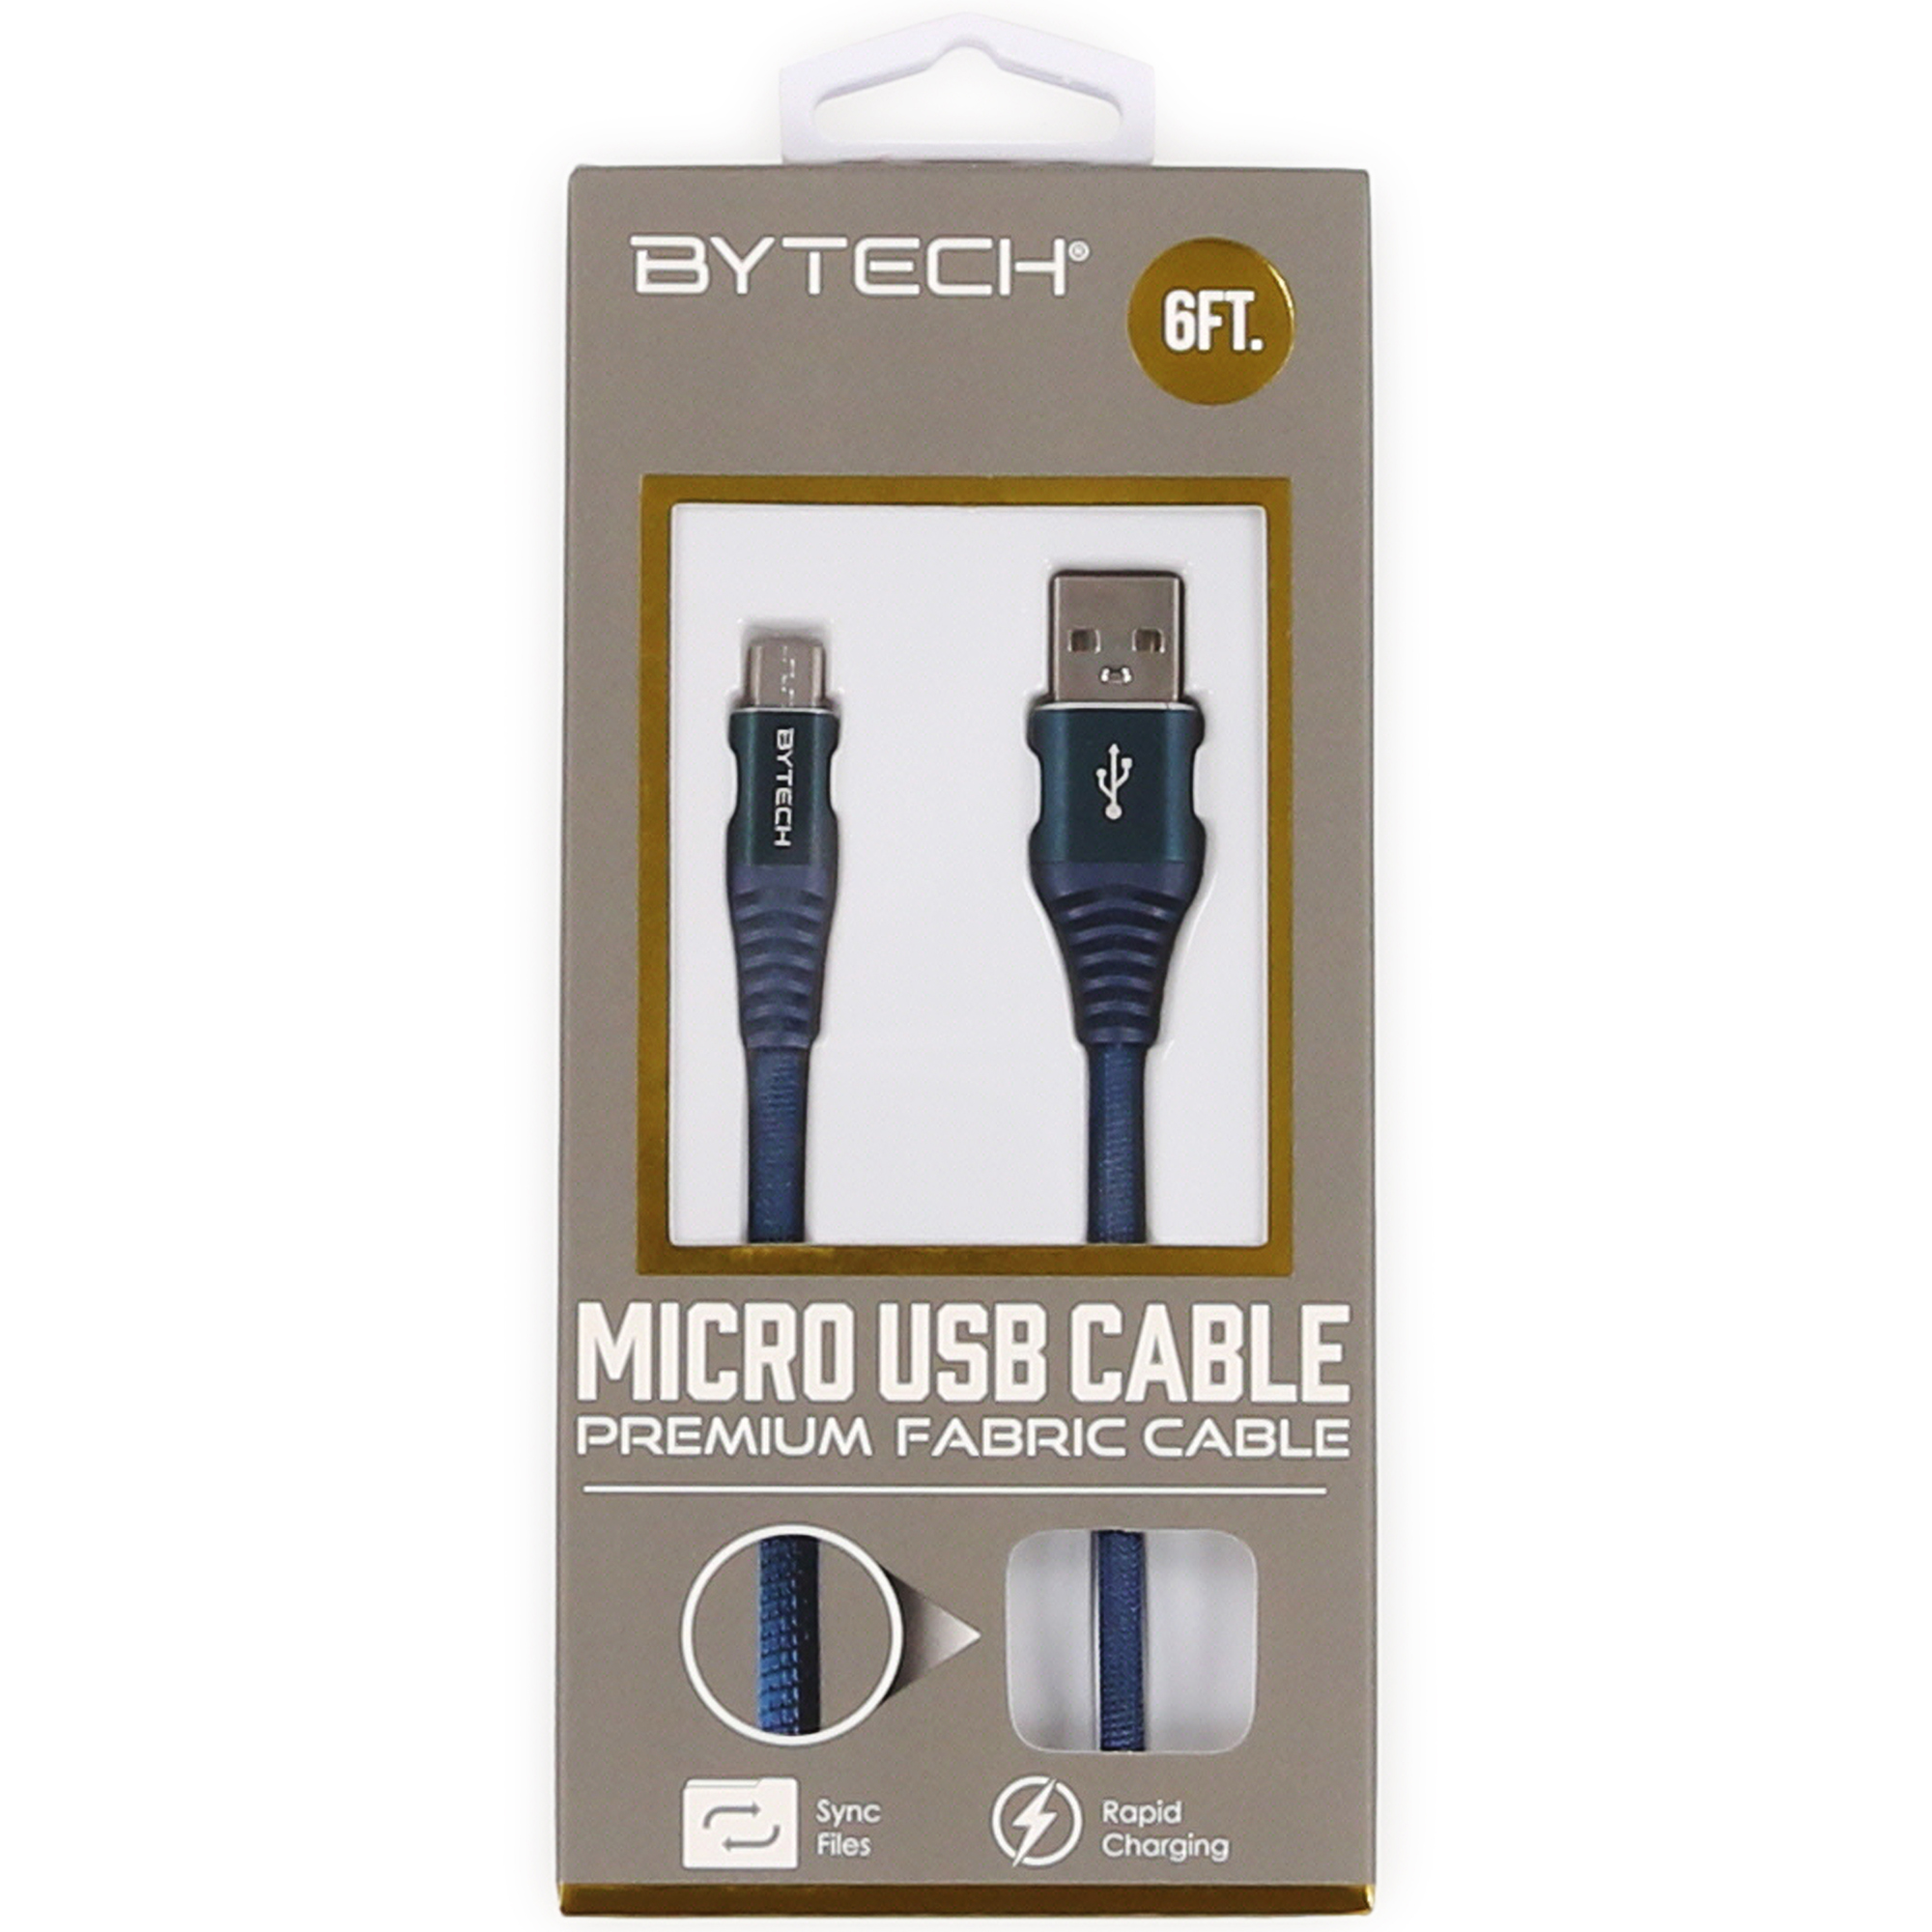 6ft Micro-Usb Premium Fabric Cable